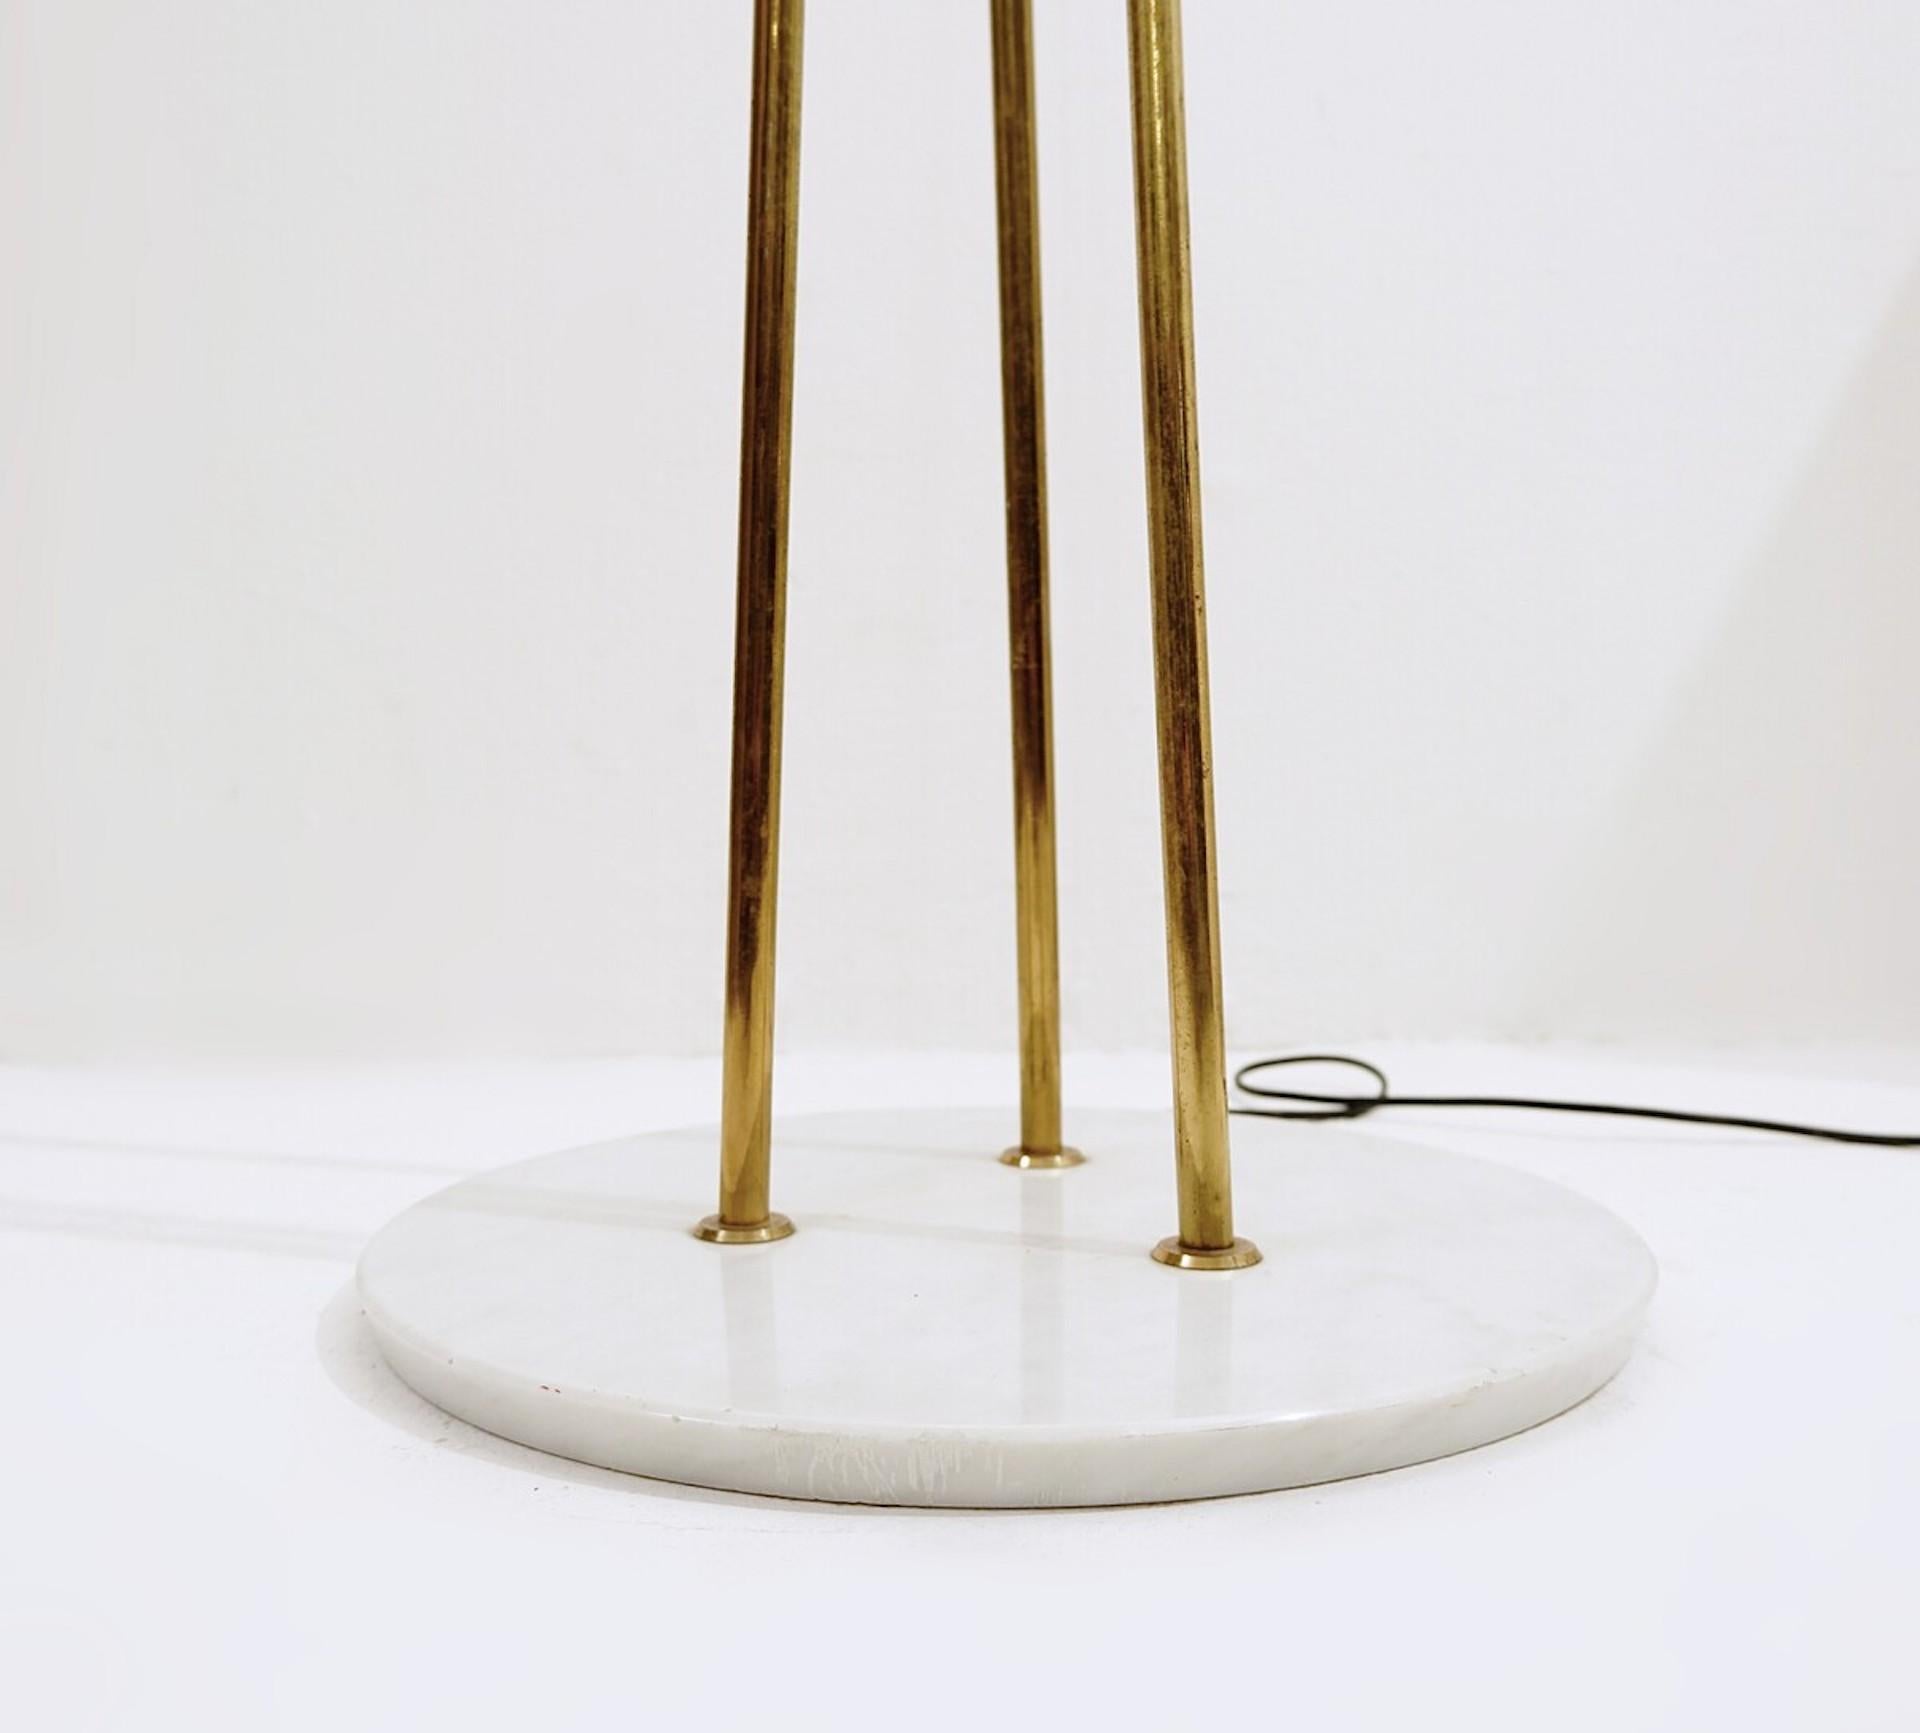 Mid-20th Century Mid-Century Modern Floor Lamp by Gaetano sciolari for Stilnovo, Italy 1950s For Sale